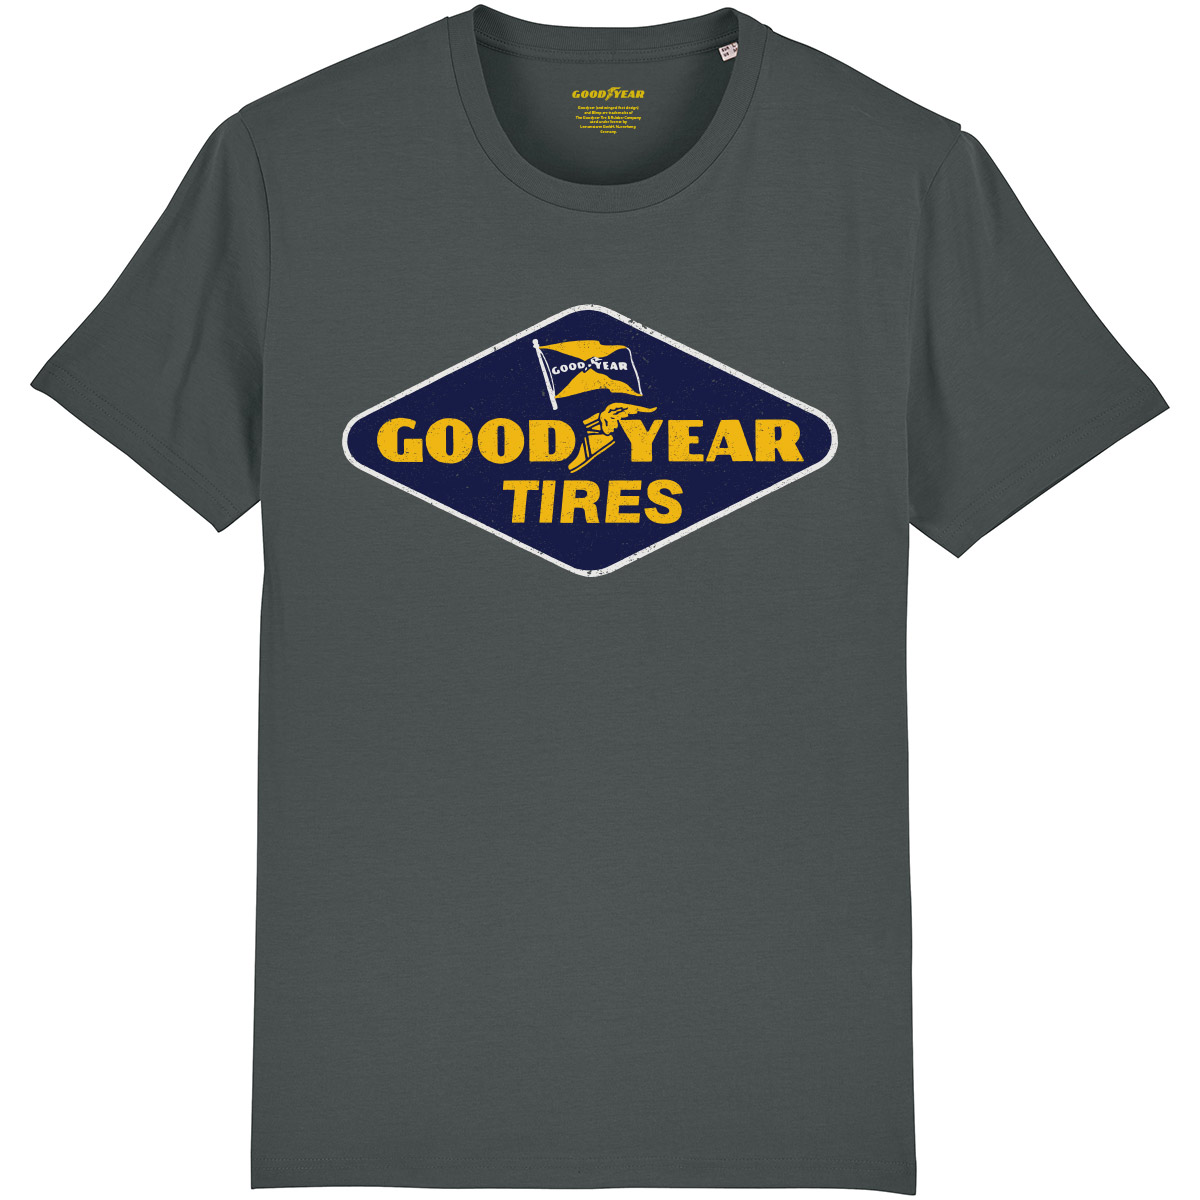 Goodyear t shirt